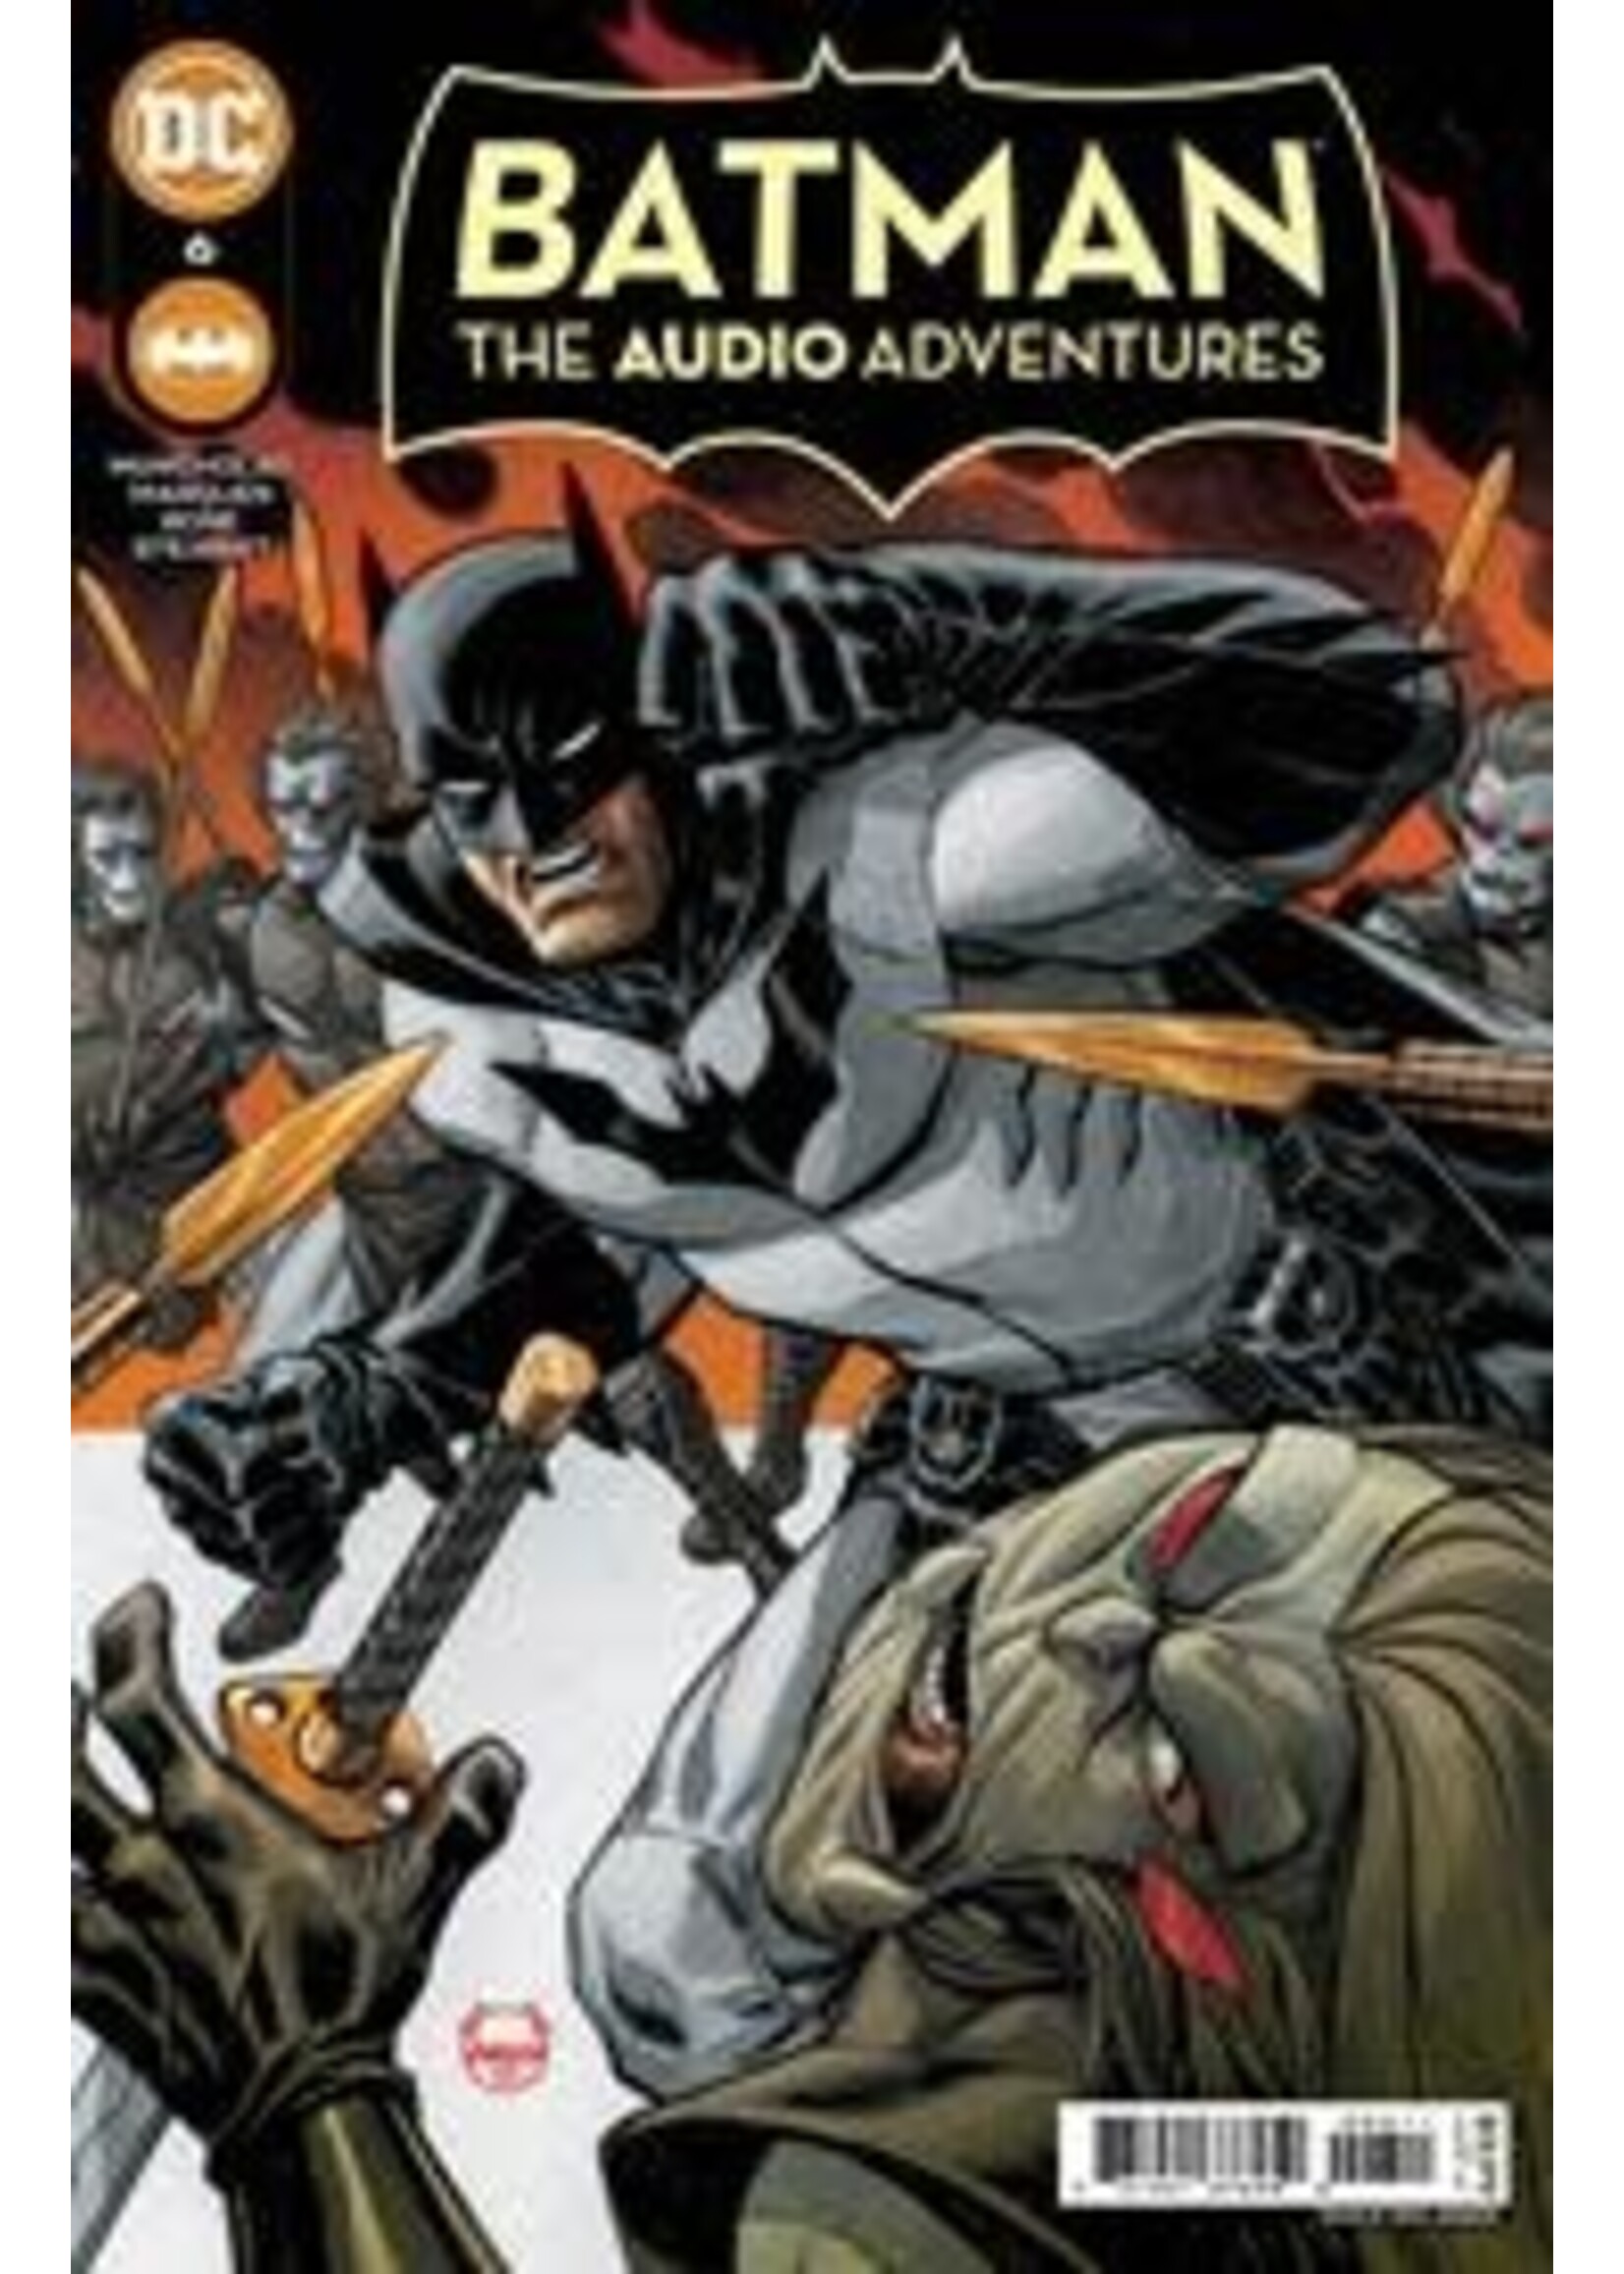 DC COMICS BATMAN THE AUDIO ADVENTURES complete 7 issue series